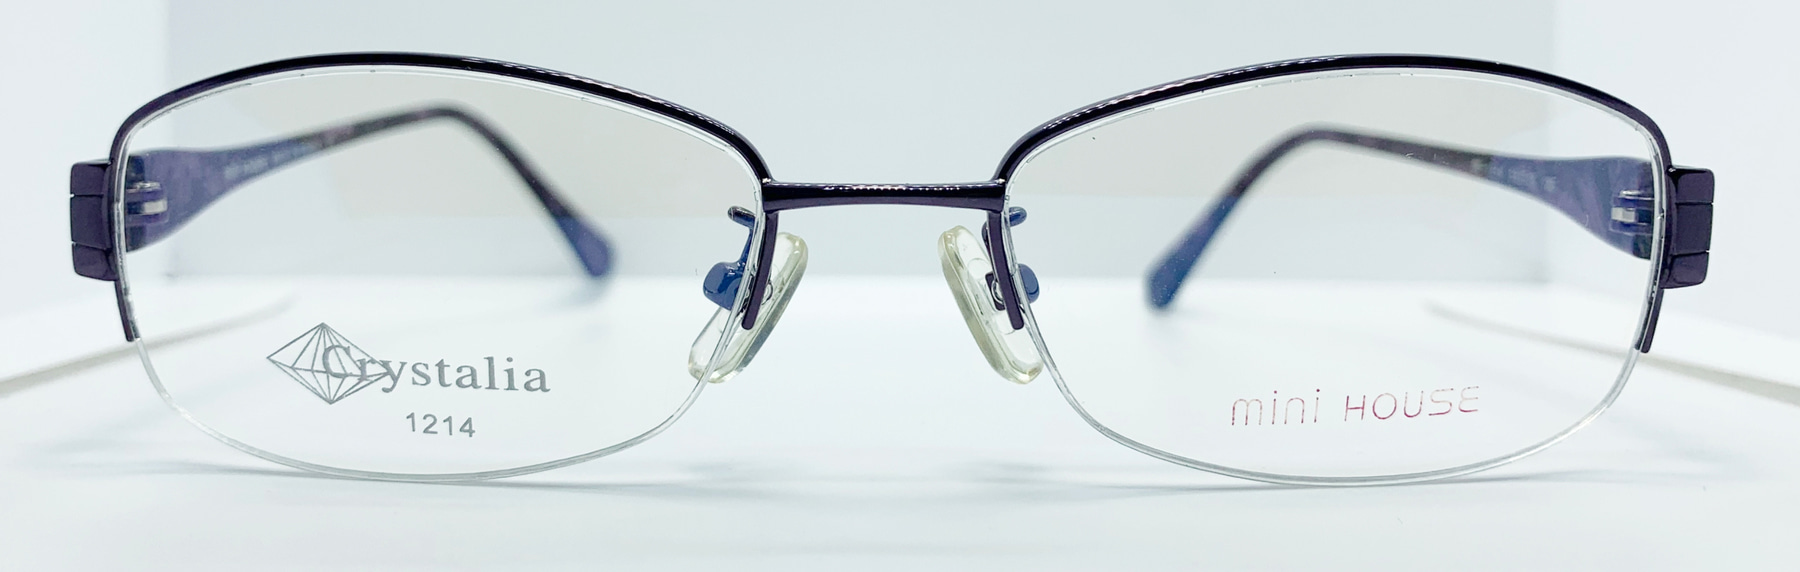 MINIHOUSE M-1214, Korean glasses, sunglasses, eyeglasses, glasses